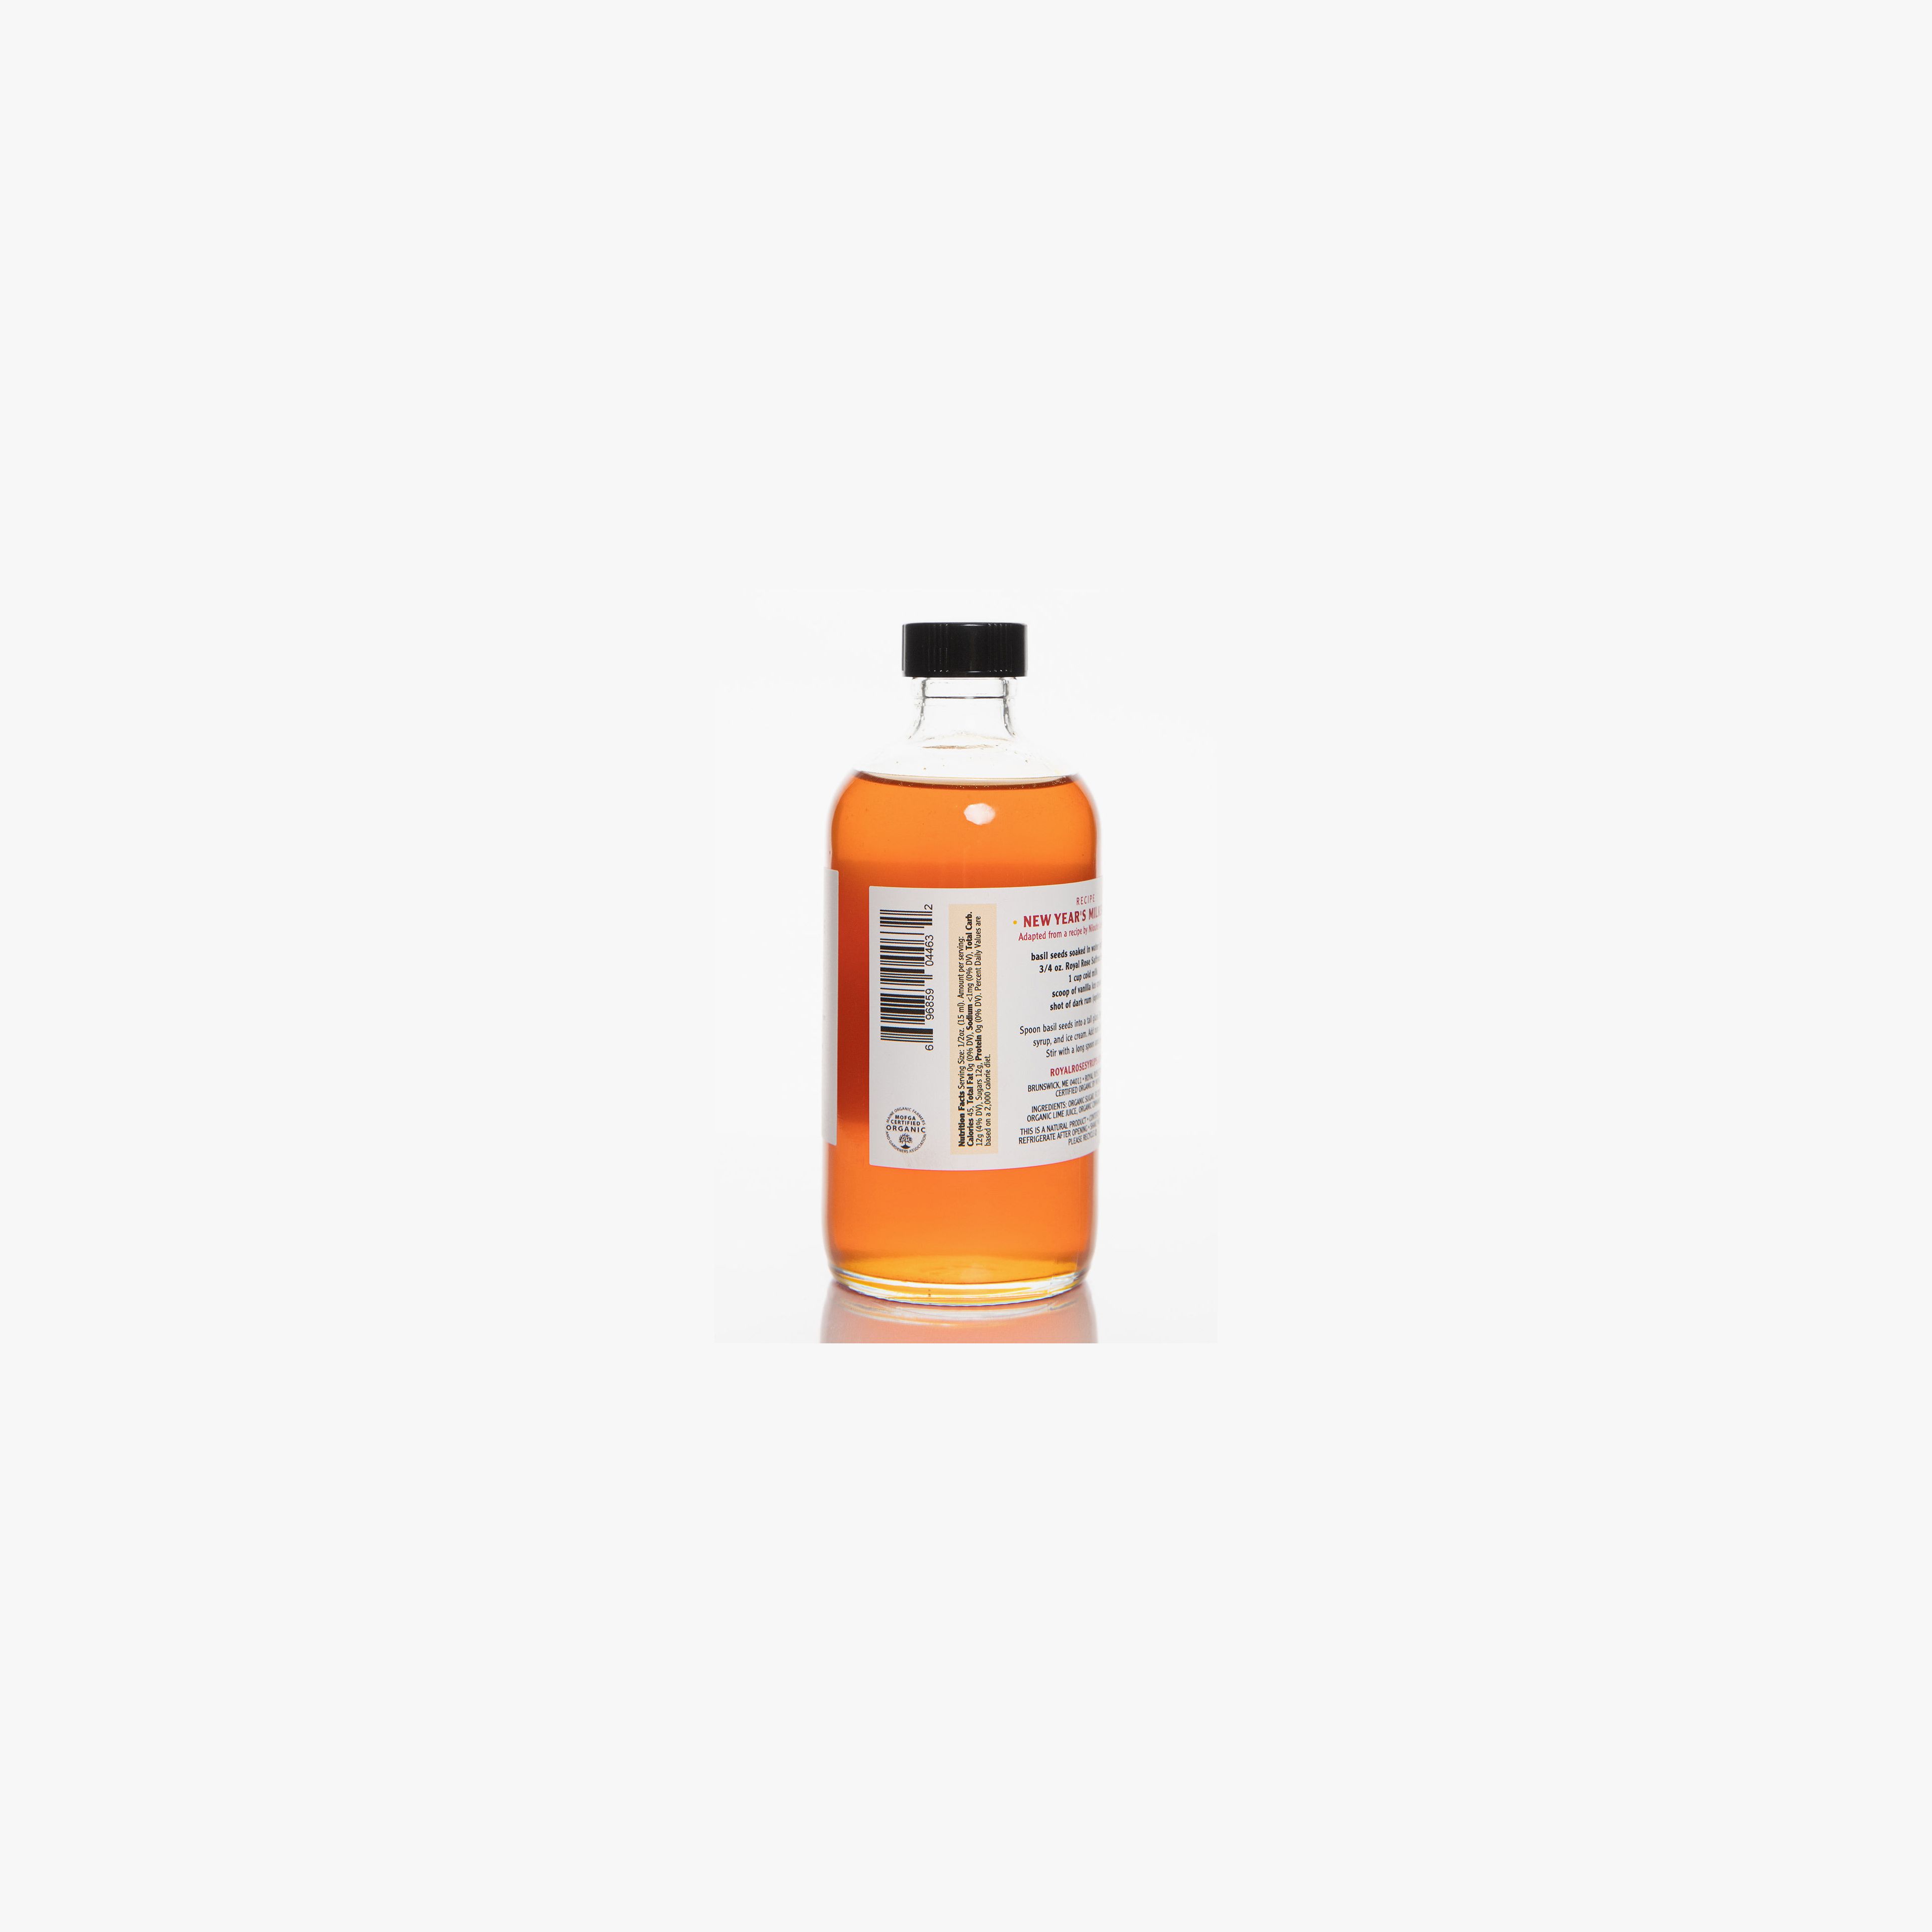 Saffron Organic Simple Syrup